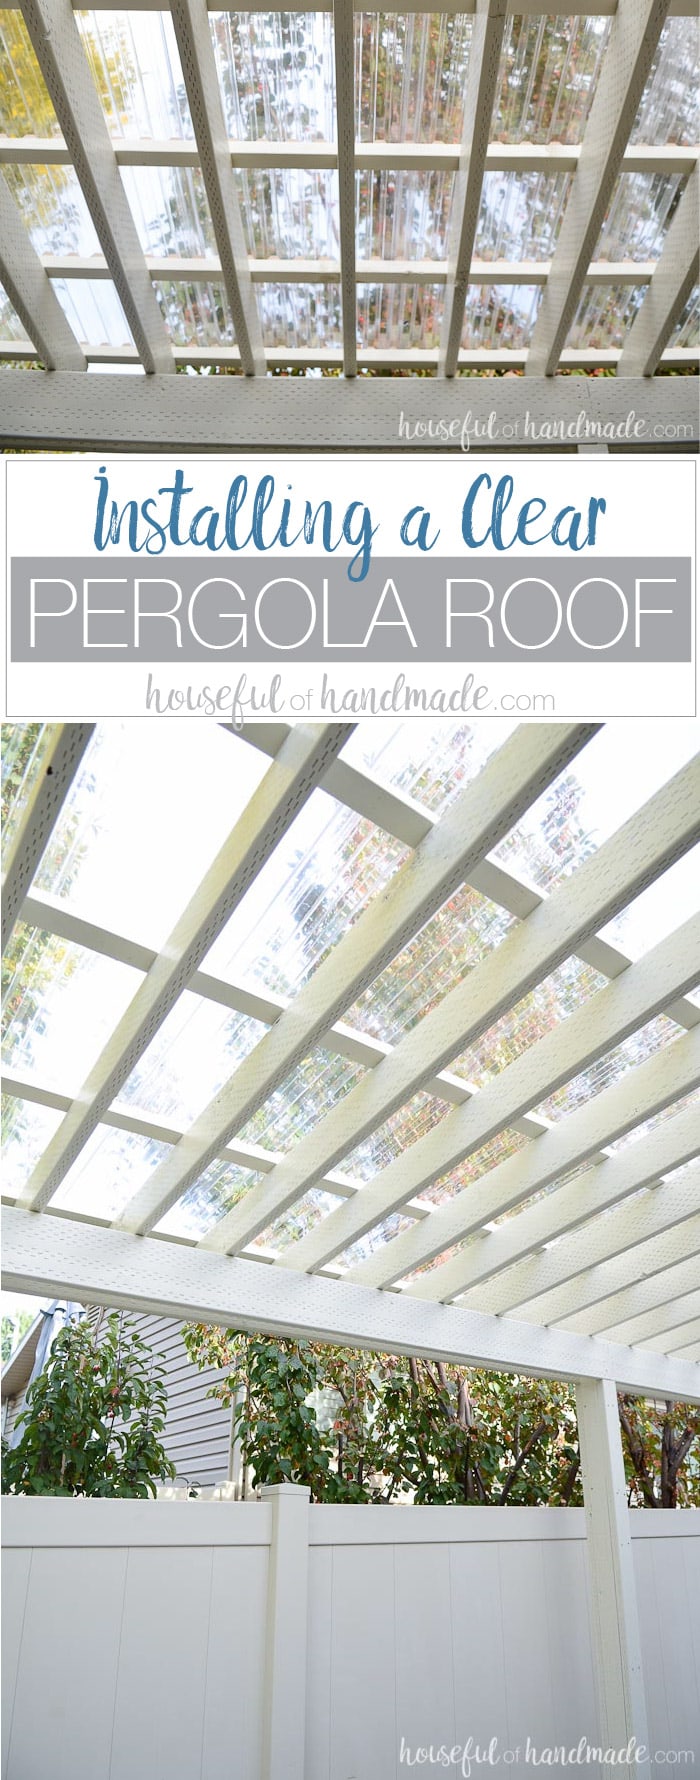 Installing a Clear Pergola Roof - a Houseful of Handmade